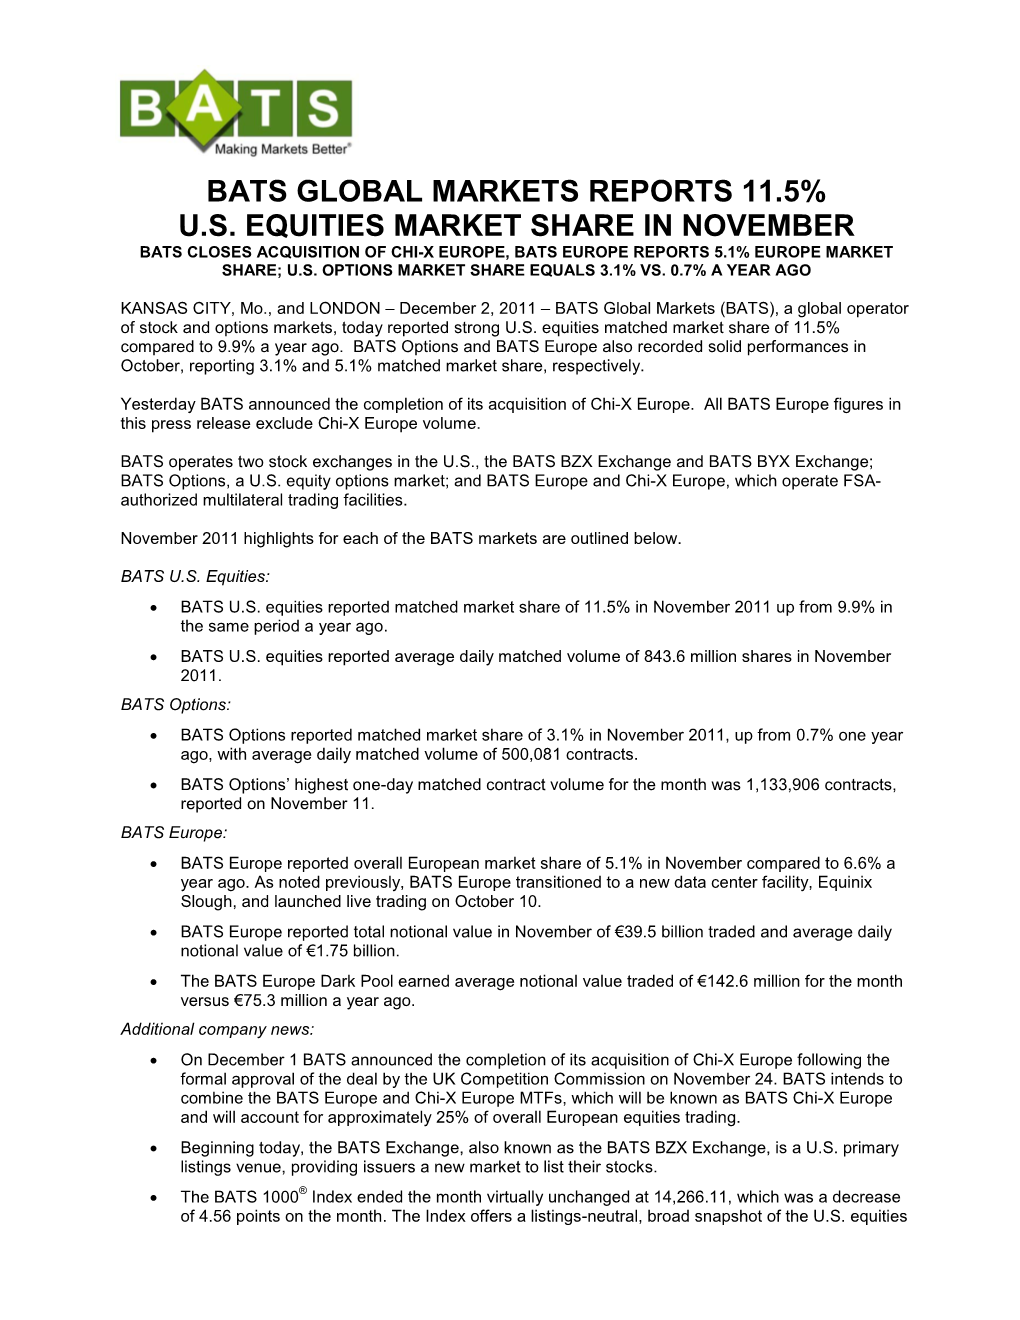 Bats Global Markets Reports 11.5% U.S. Equities Market Share in November Bats Closes Acquisition of Chi-X Europe, Bats Europe Reports 5.1% Europe Market Share; U.S